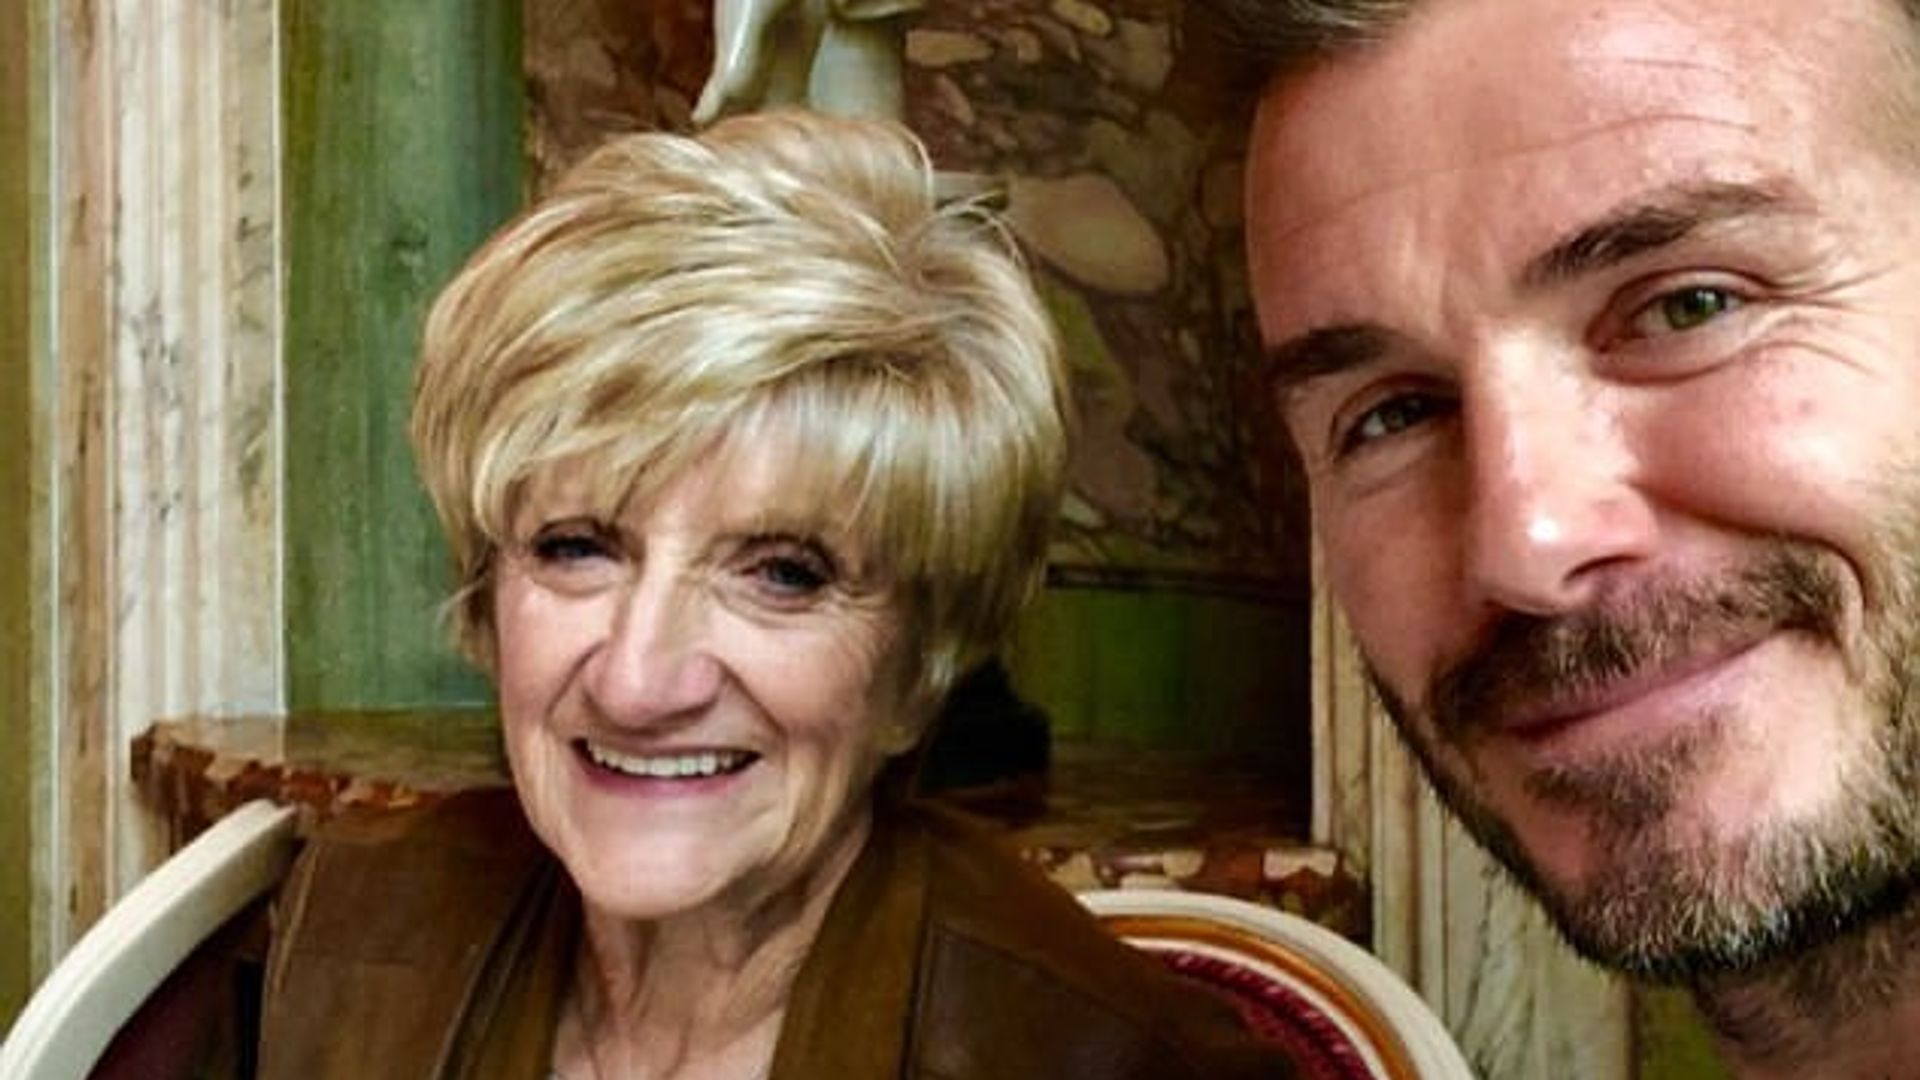 David Beckham having a cup of tea with his mum Sandra